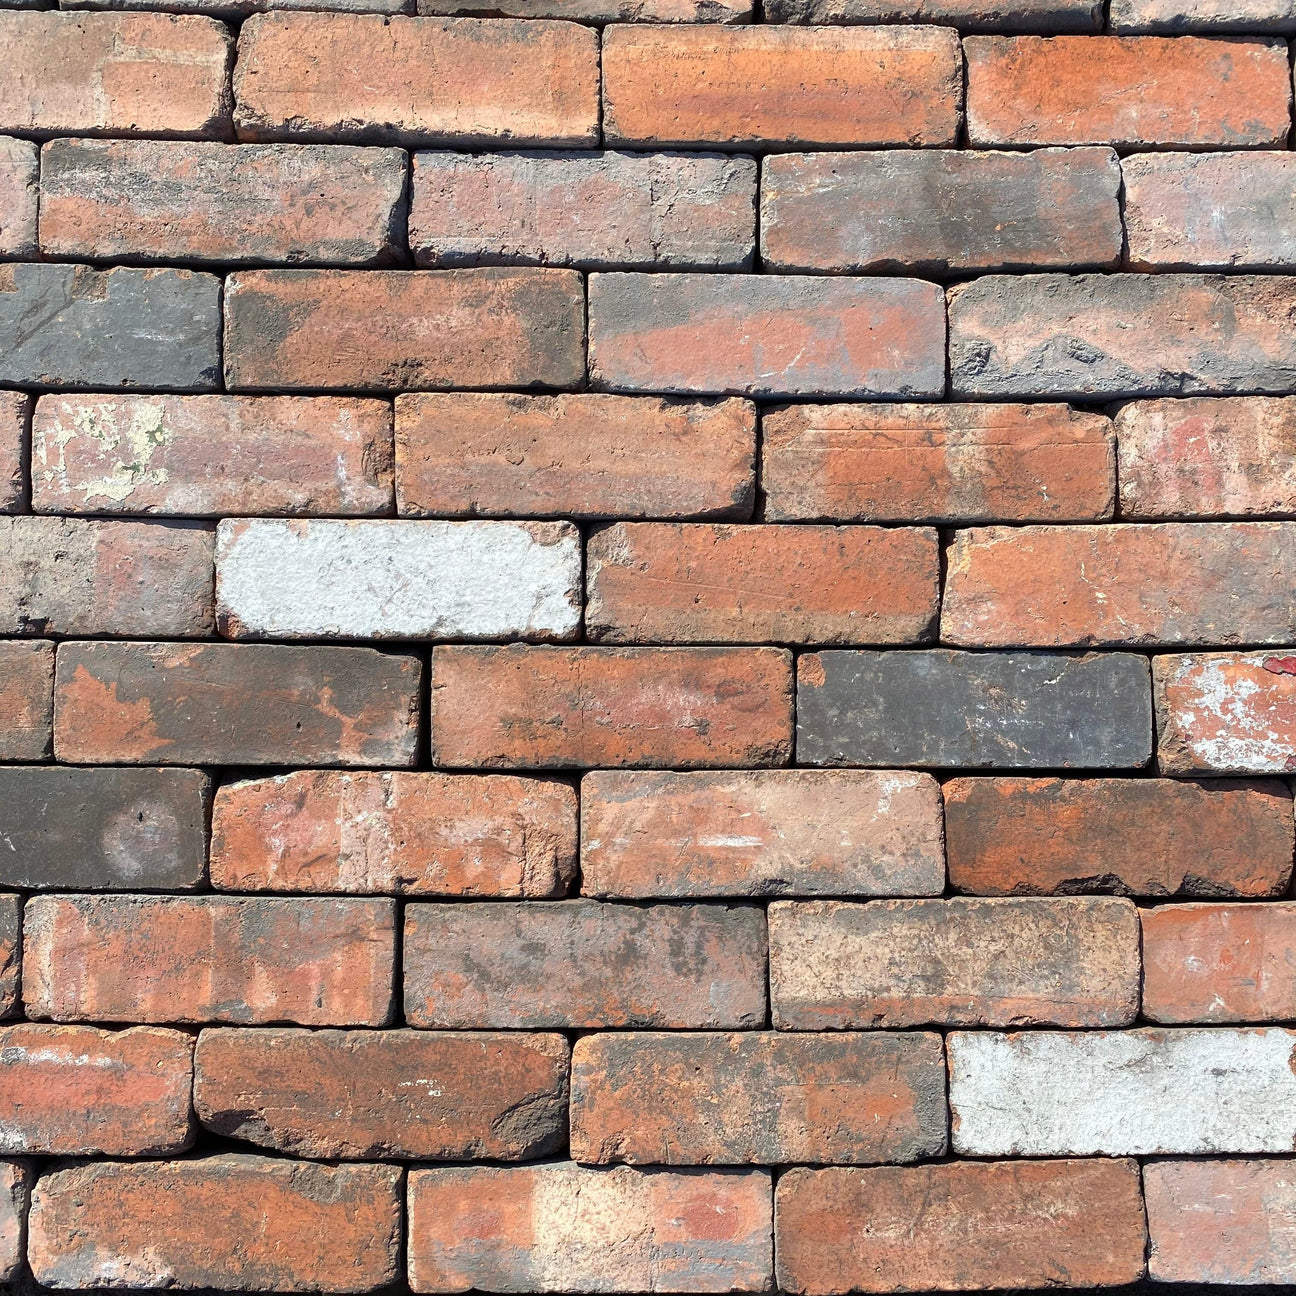 Reclaimed Pressed Bricks - Reclaimed Brick Company